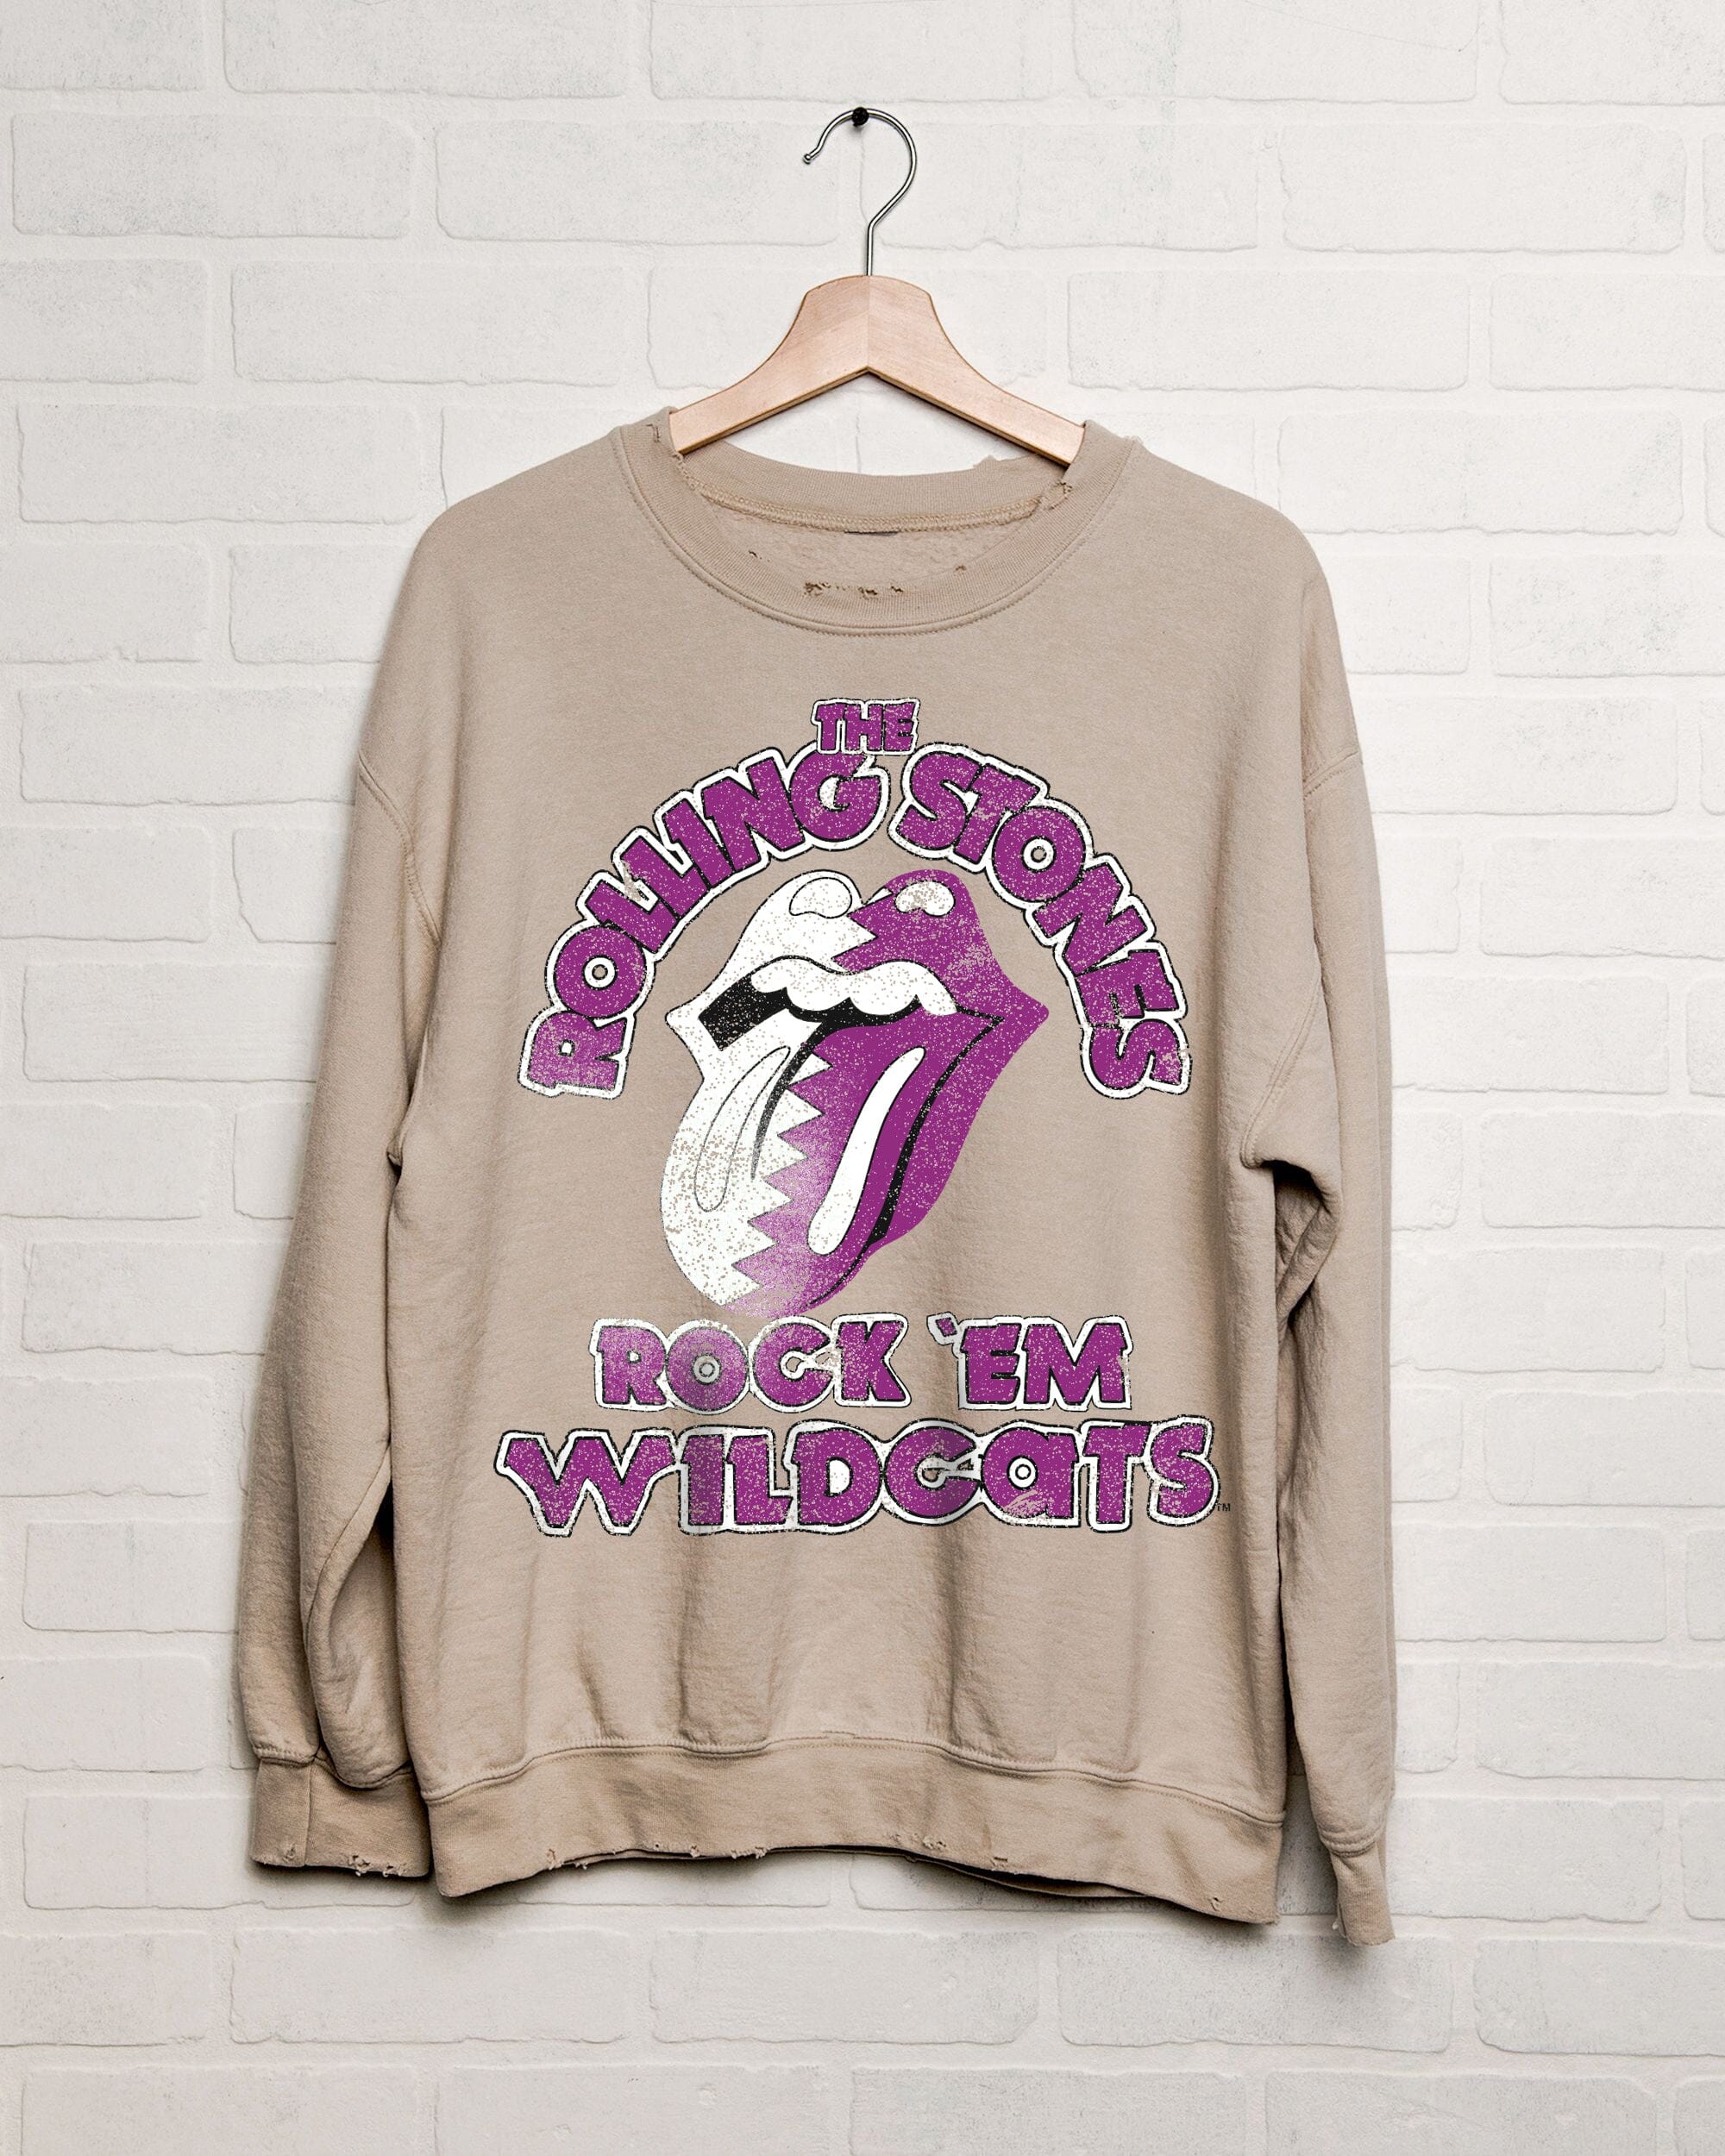 Rolling Stones Rock 'Em KSU Wildcats Sand Thrifted Sweatshirt